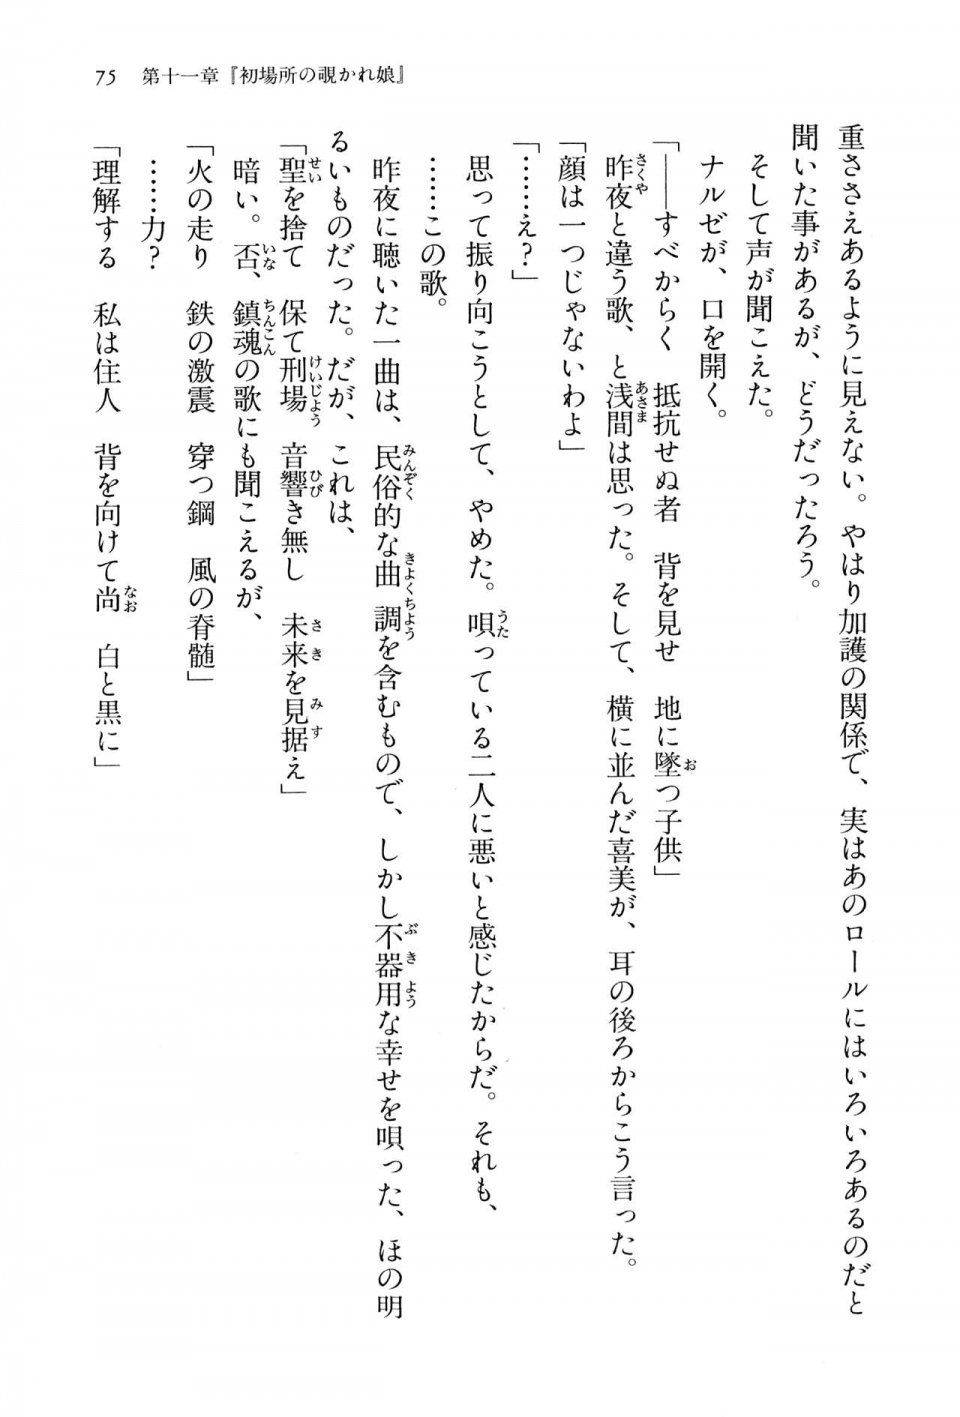 Kyoukai Senjou no Horizon BD Special Mininovel Vol 3(2A) - Photo #79